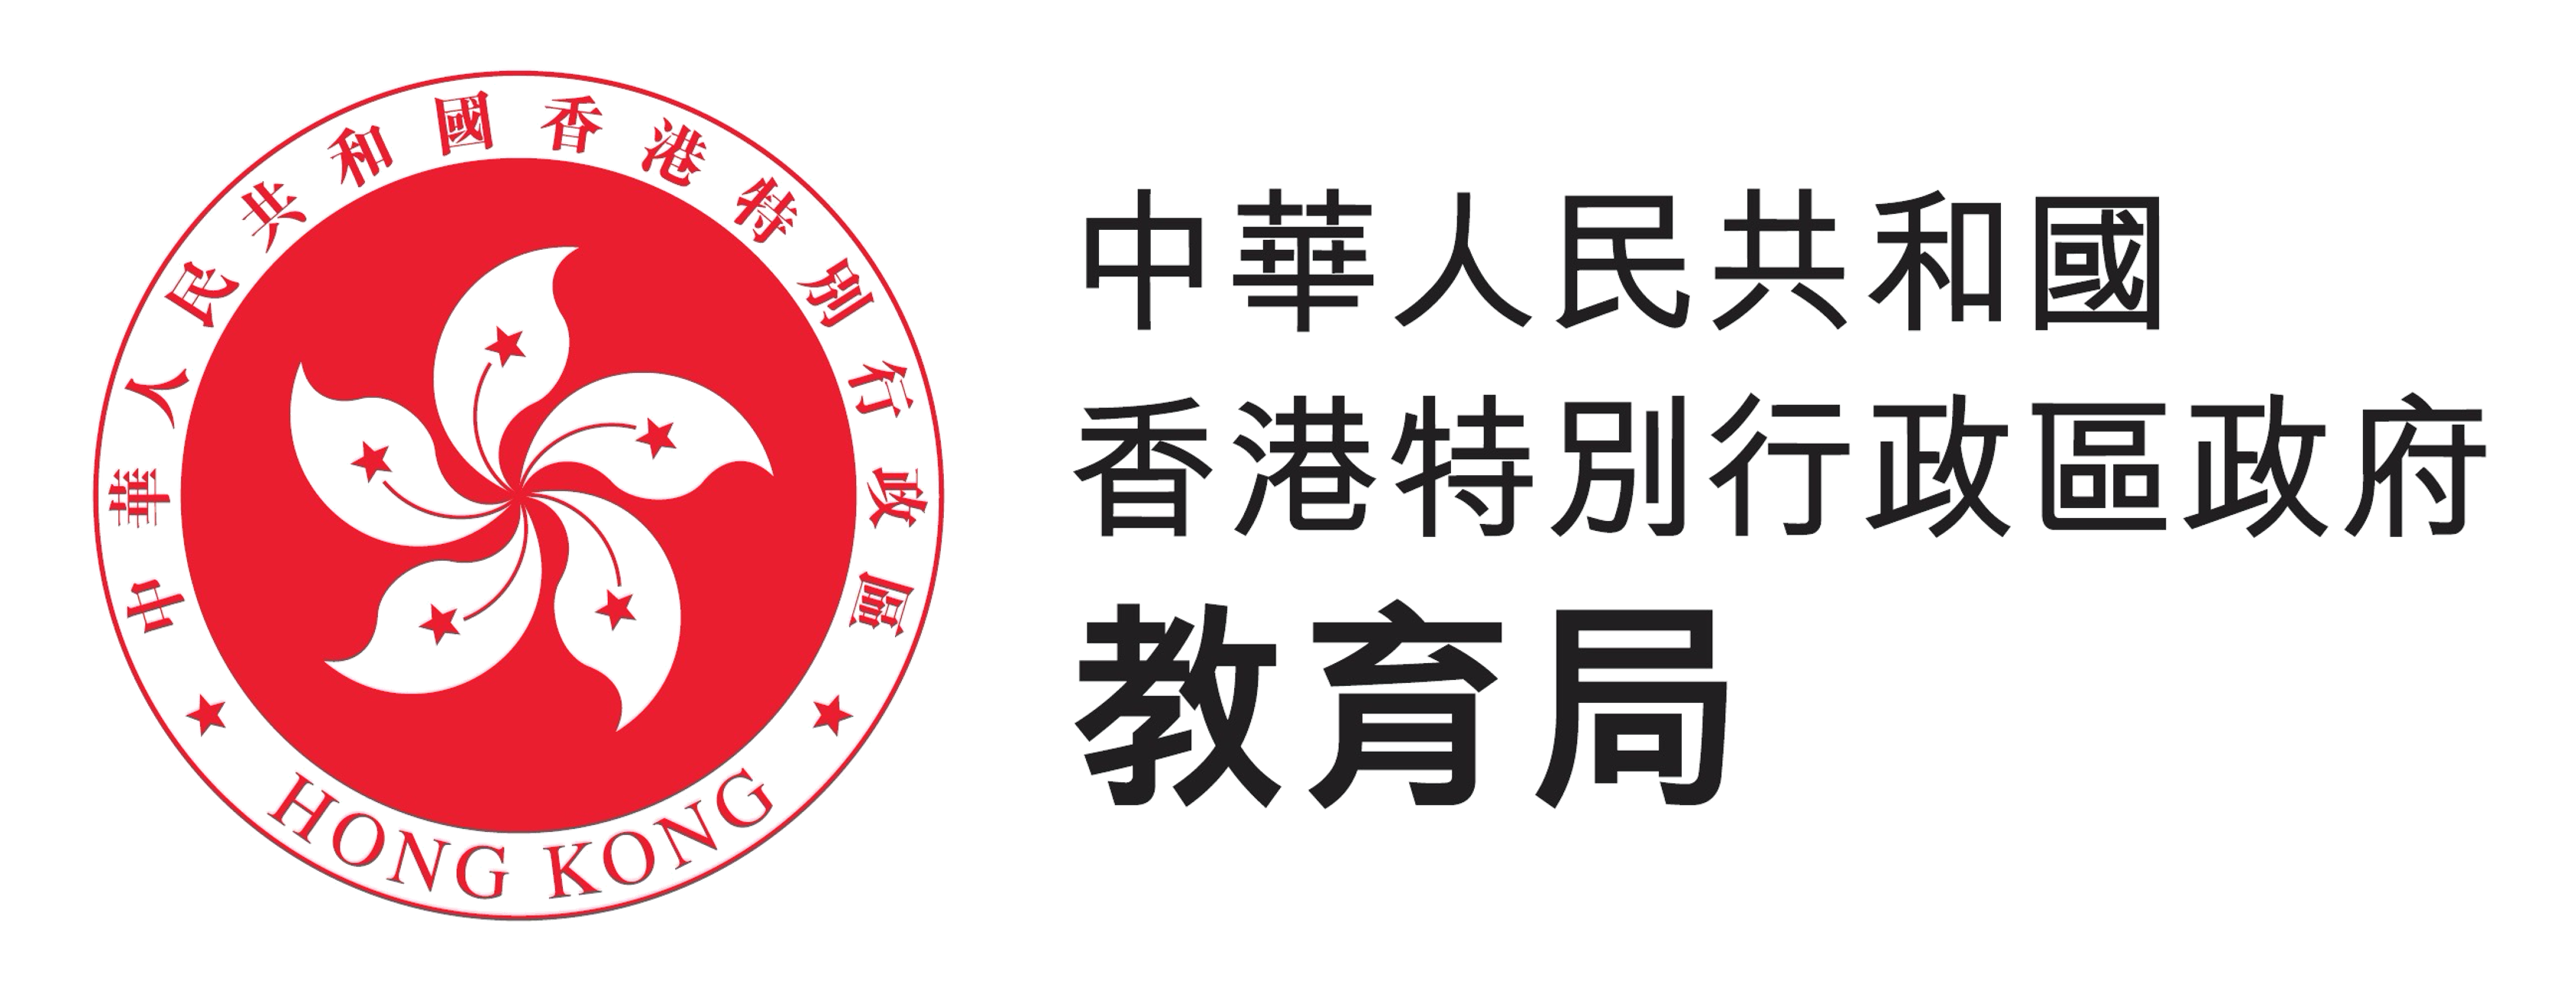 HKSES logo